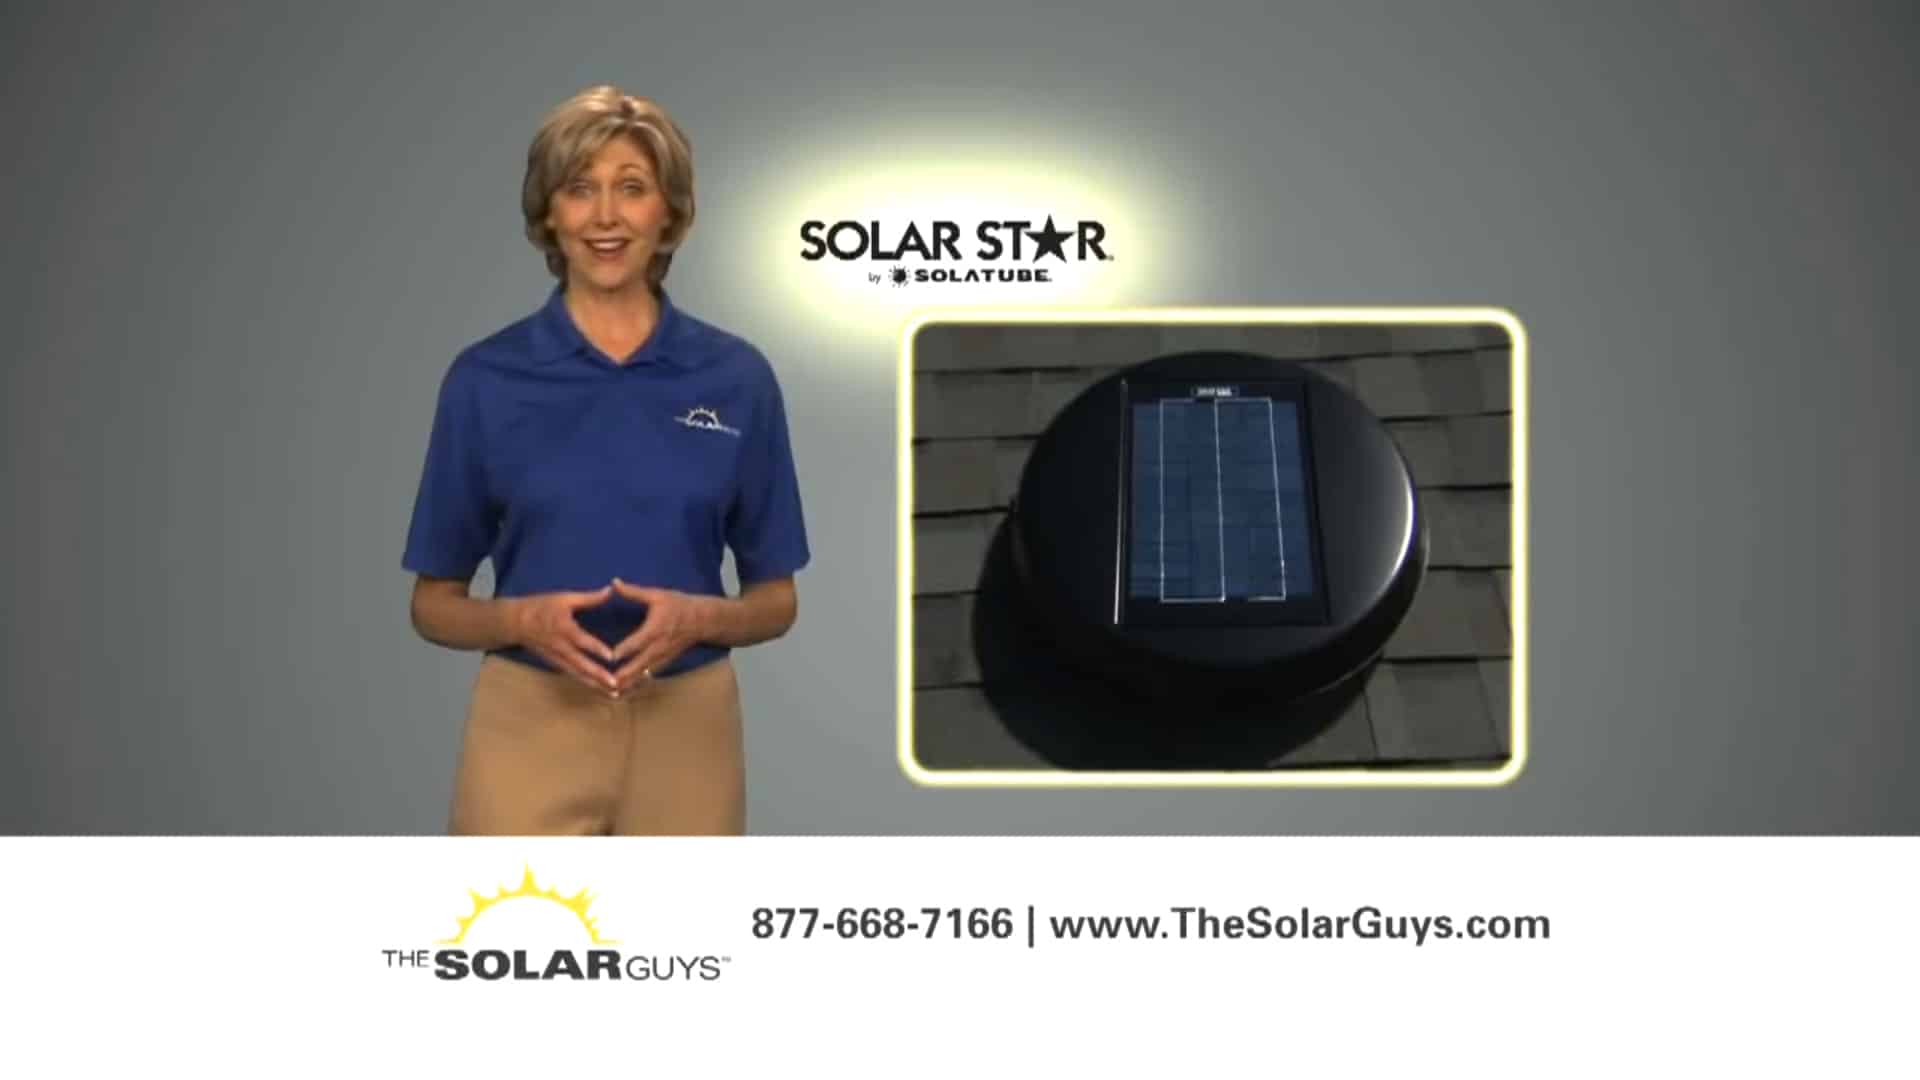 The Solar Guys 2012 Commercial Solar Star Solar Attic Fans